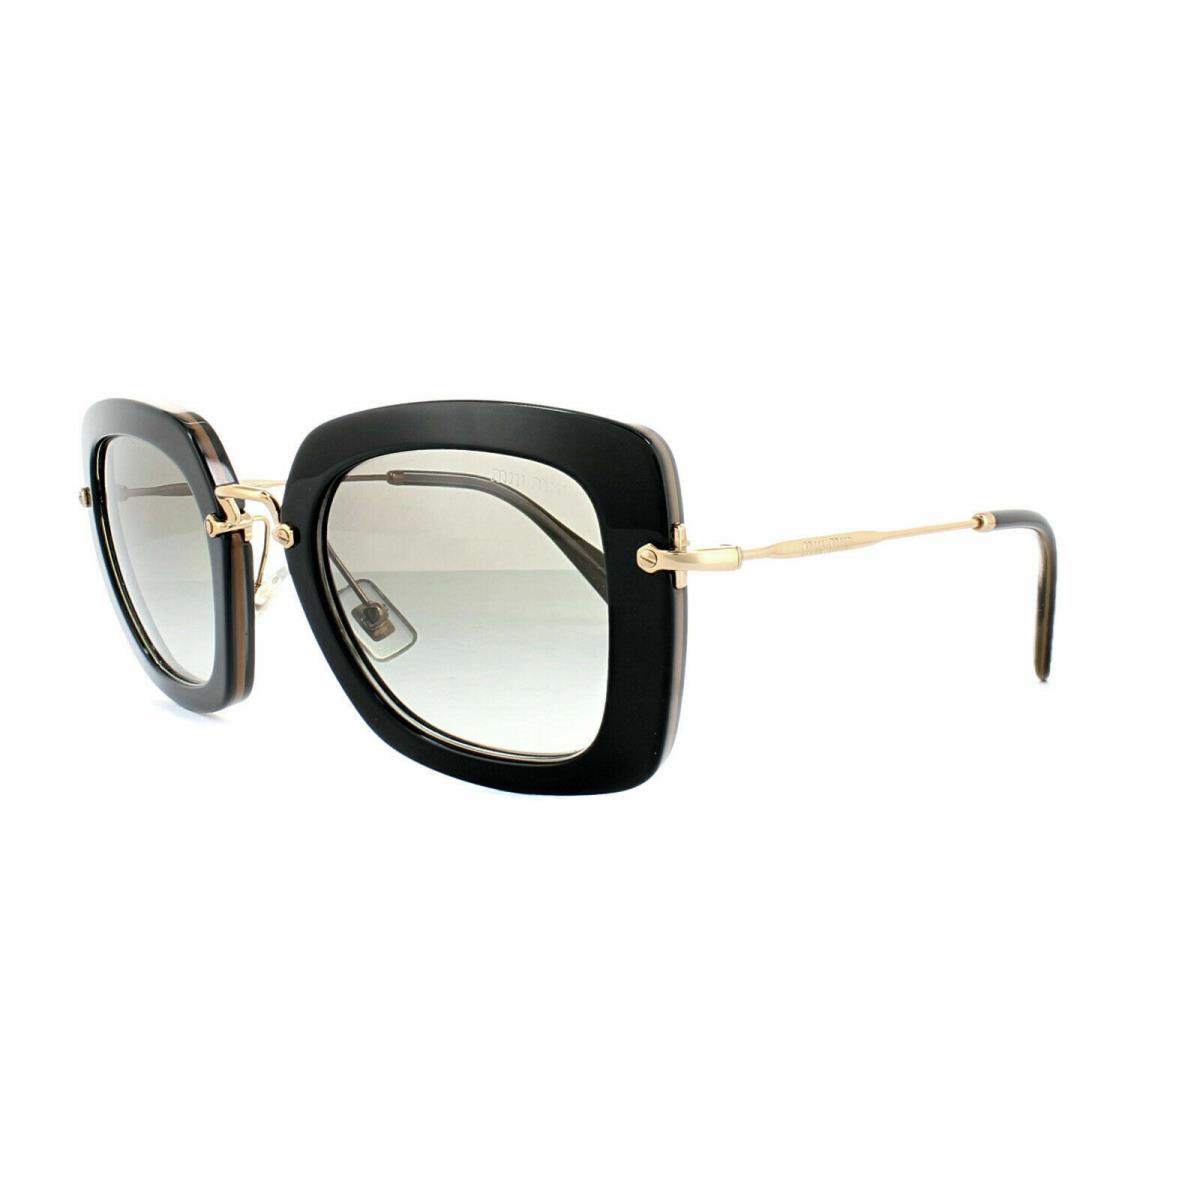 Miu Miu Sunglasses MU07OS KAY0A7 52 Sunglasses in Black Gray Lens Opal Square